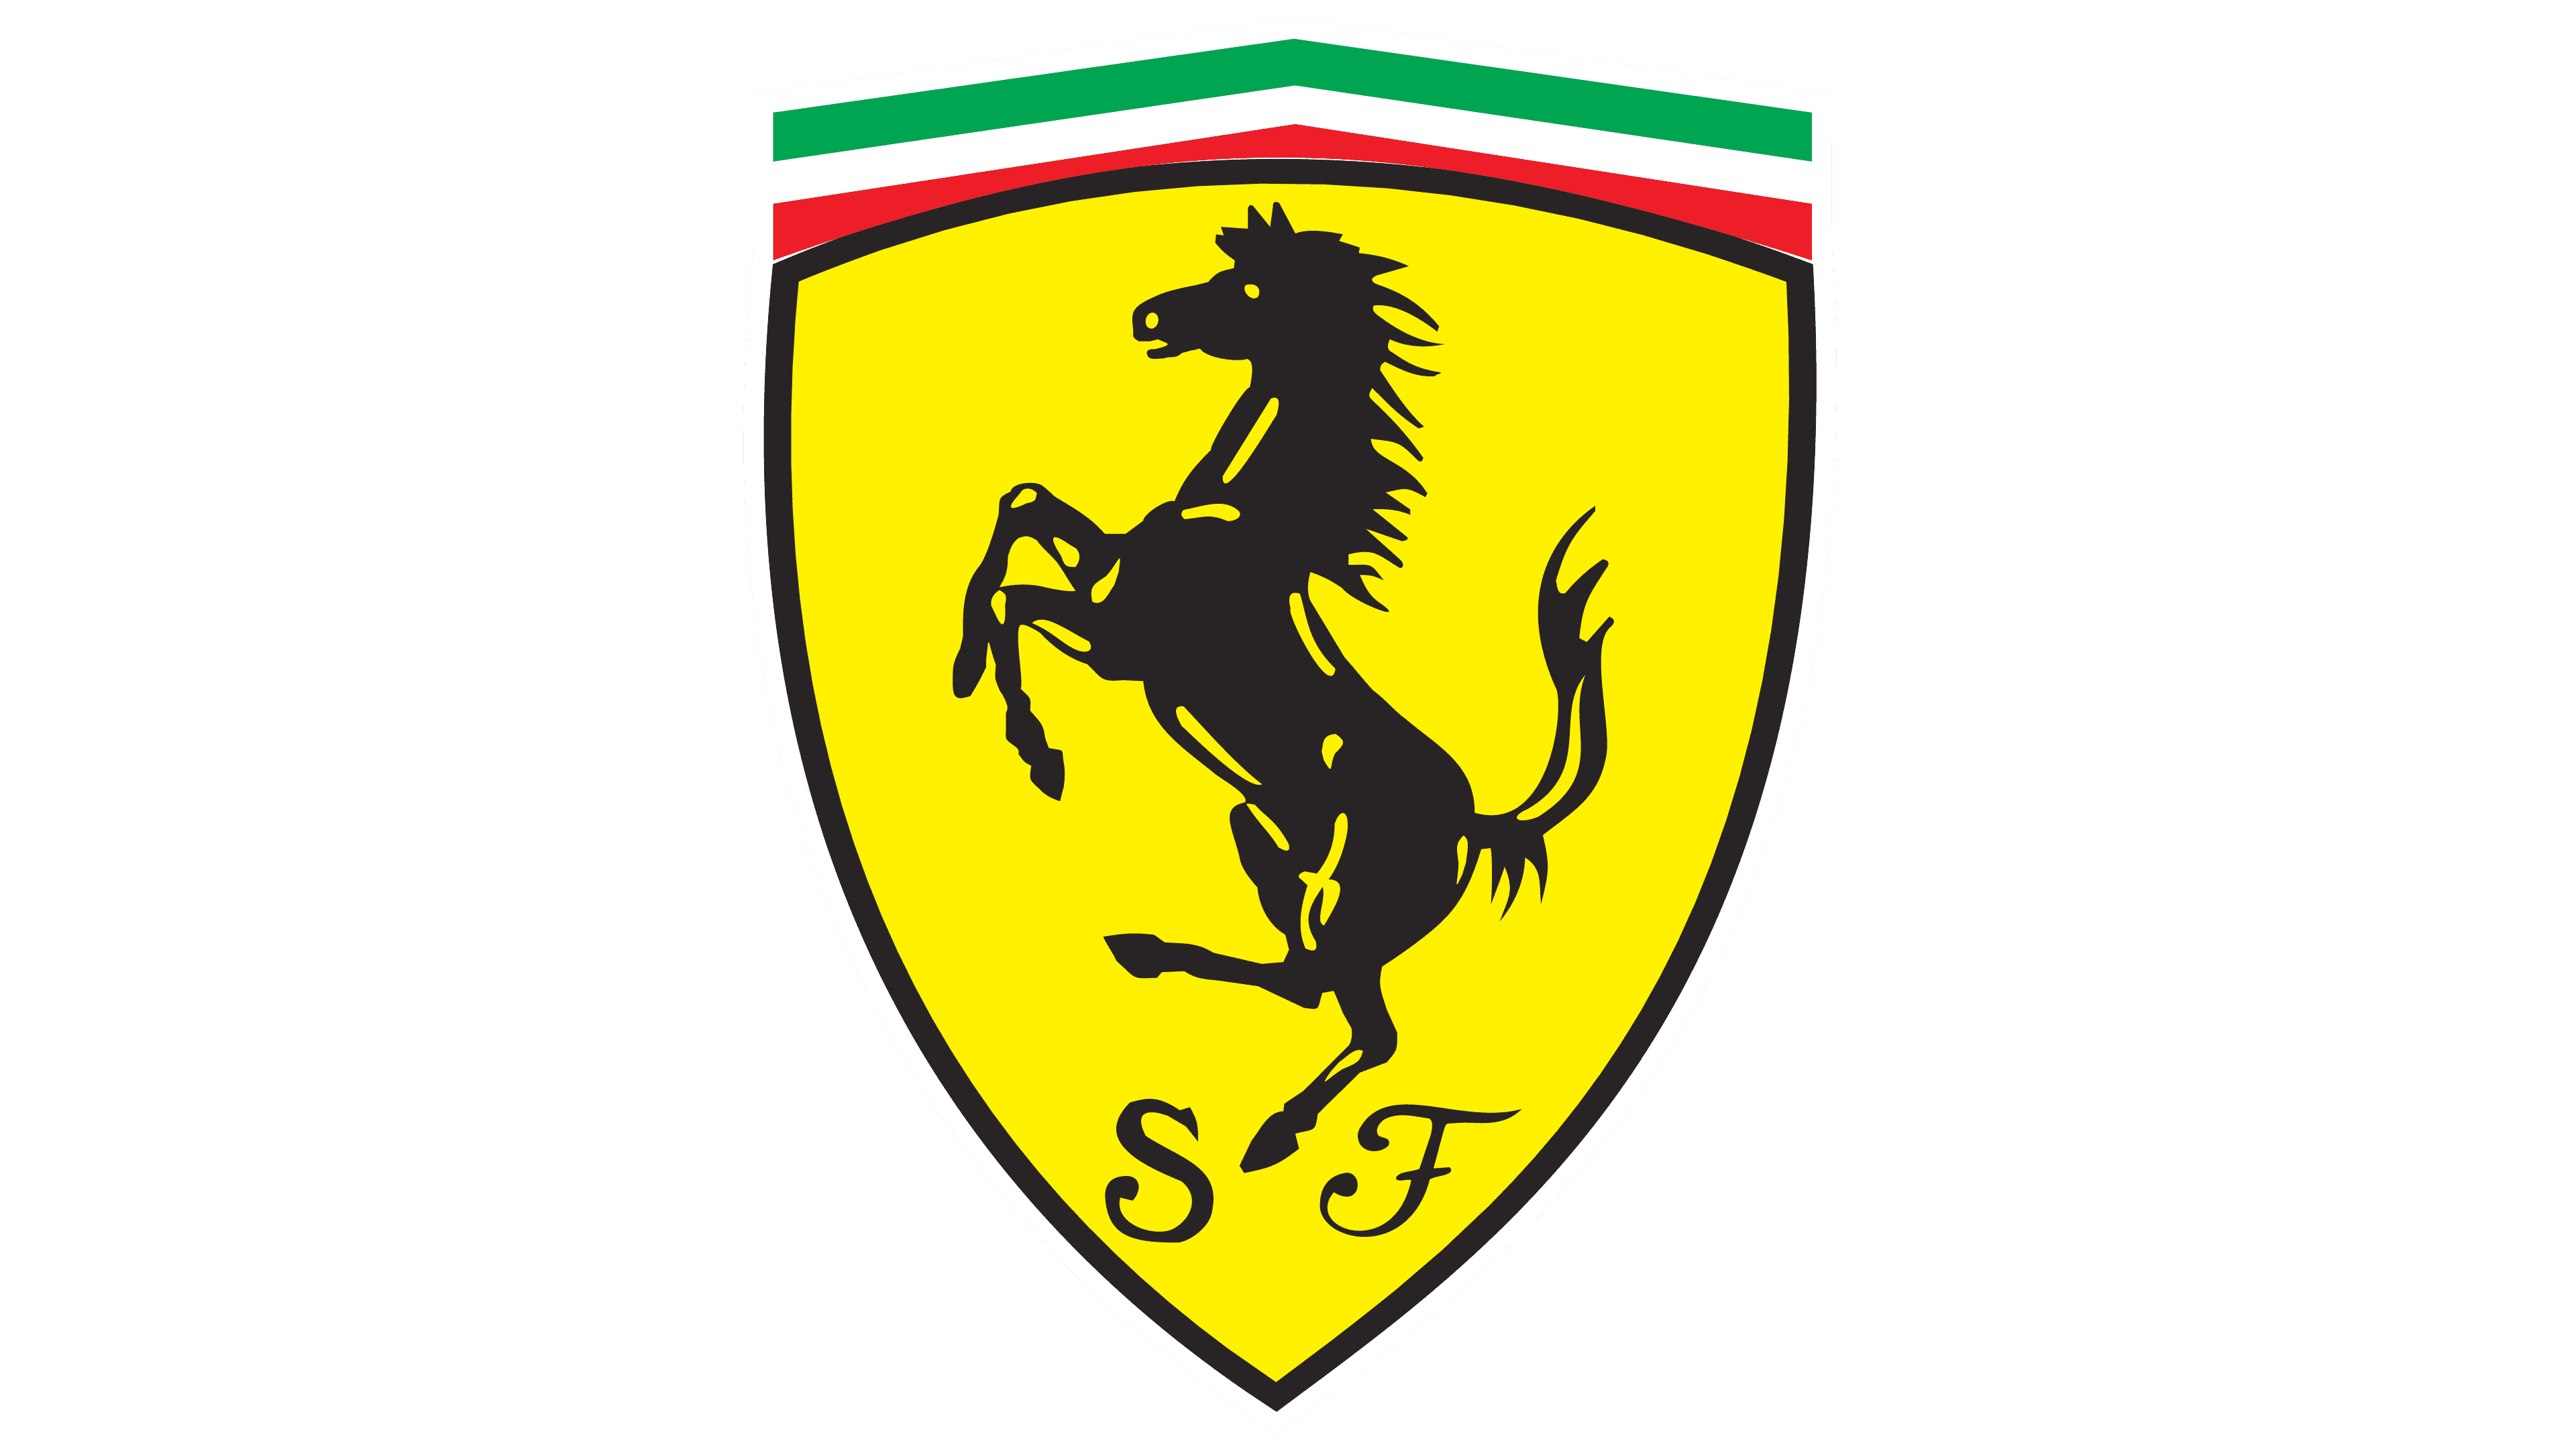 ferrari-scuderia-logo-symbol-history-png-3840-2160